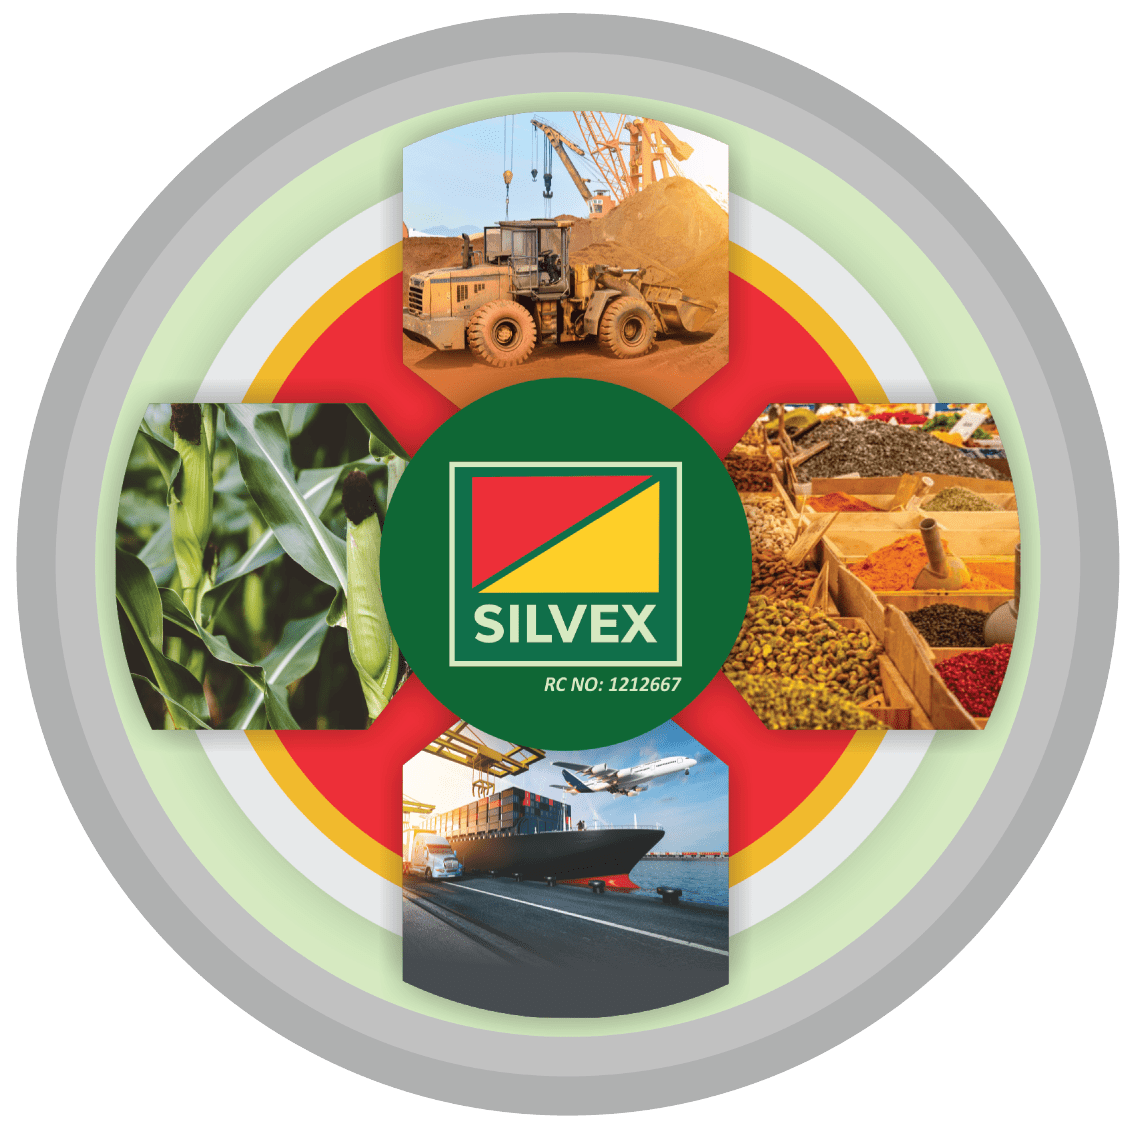 Silvex International Limited